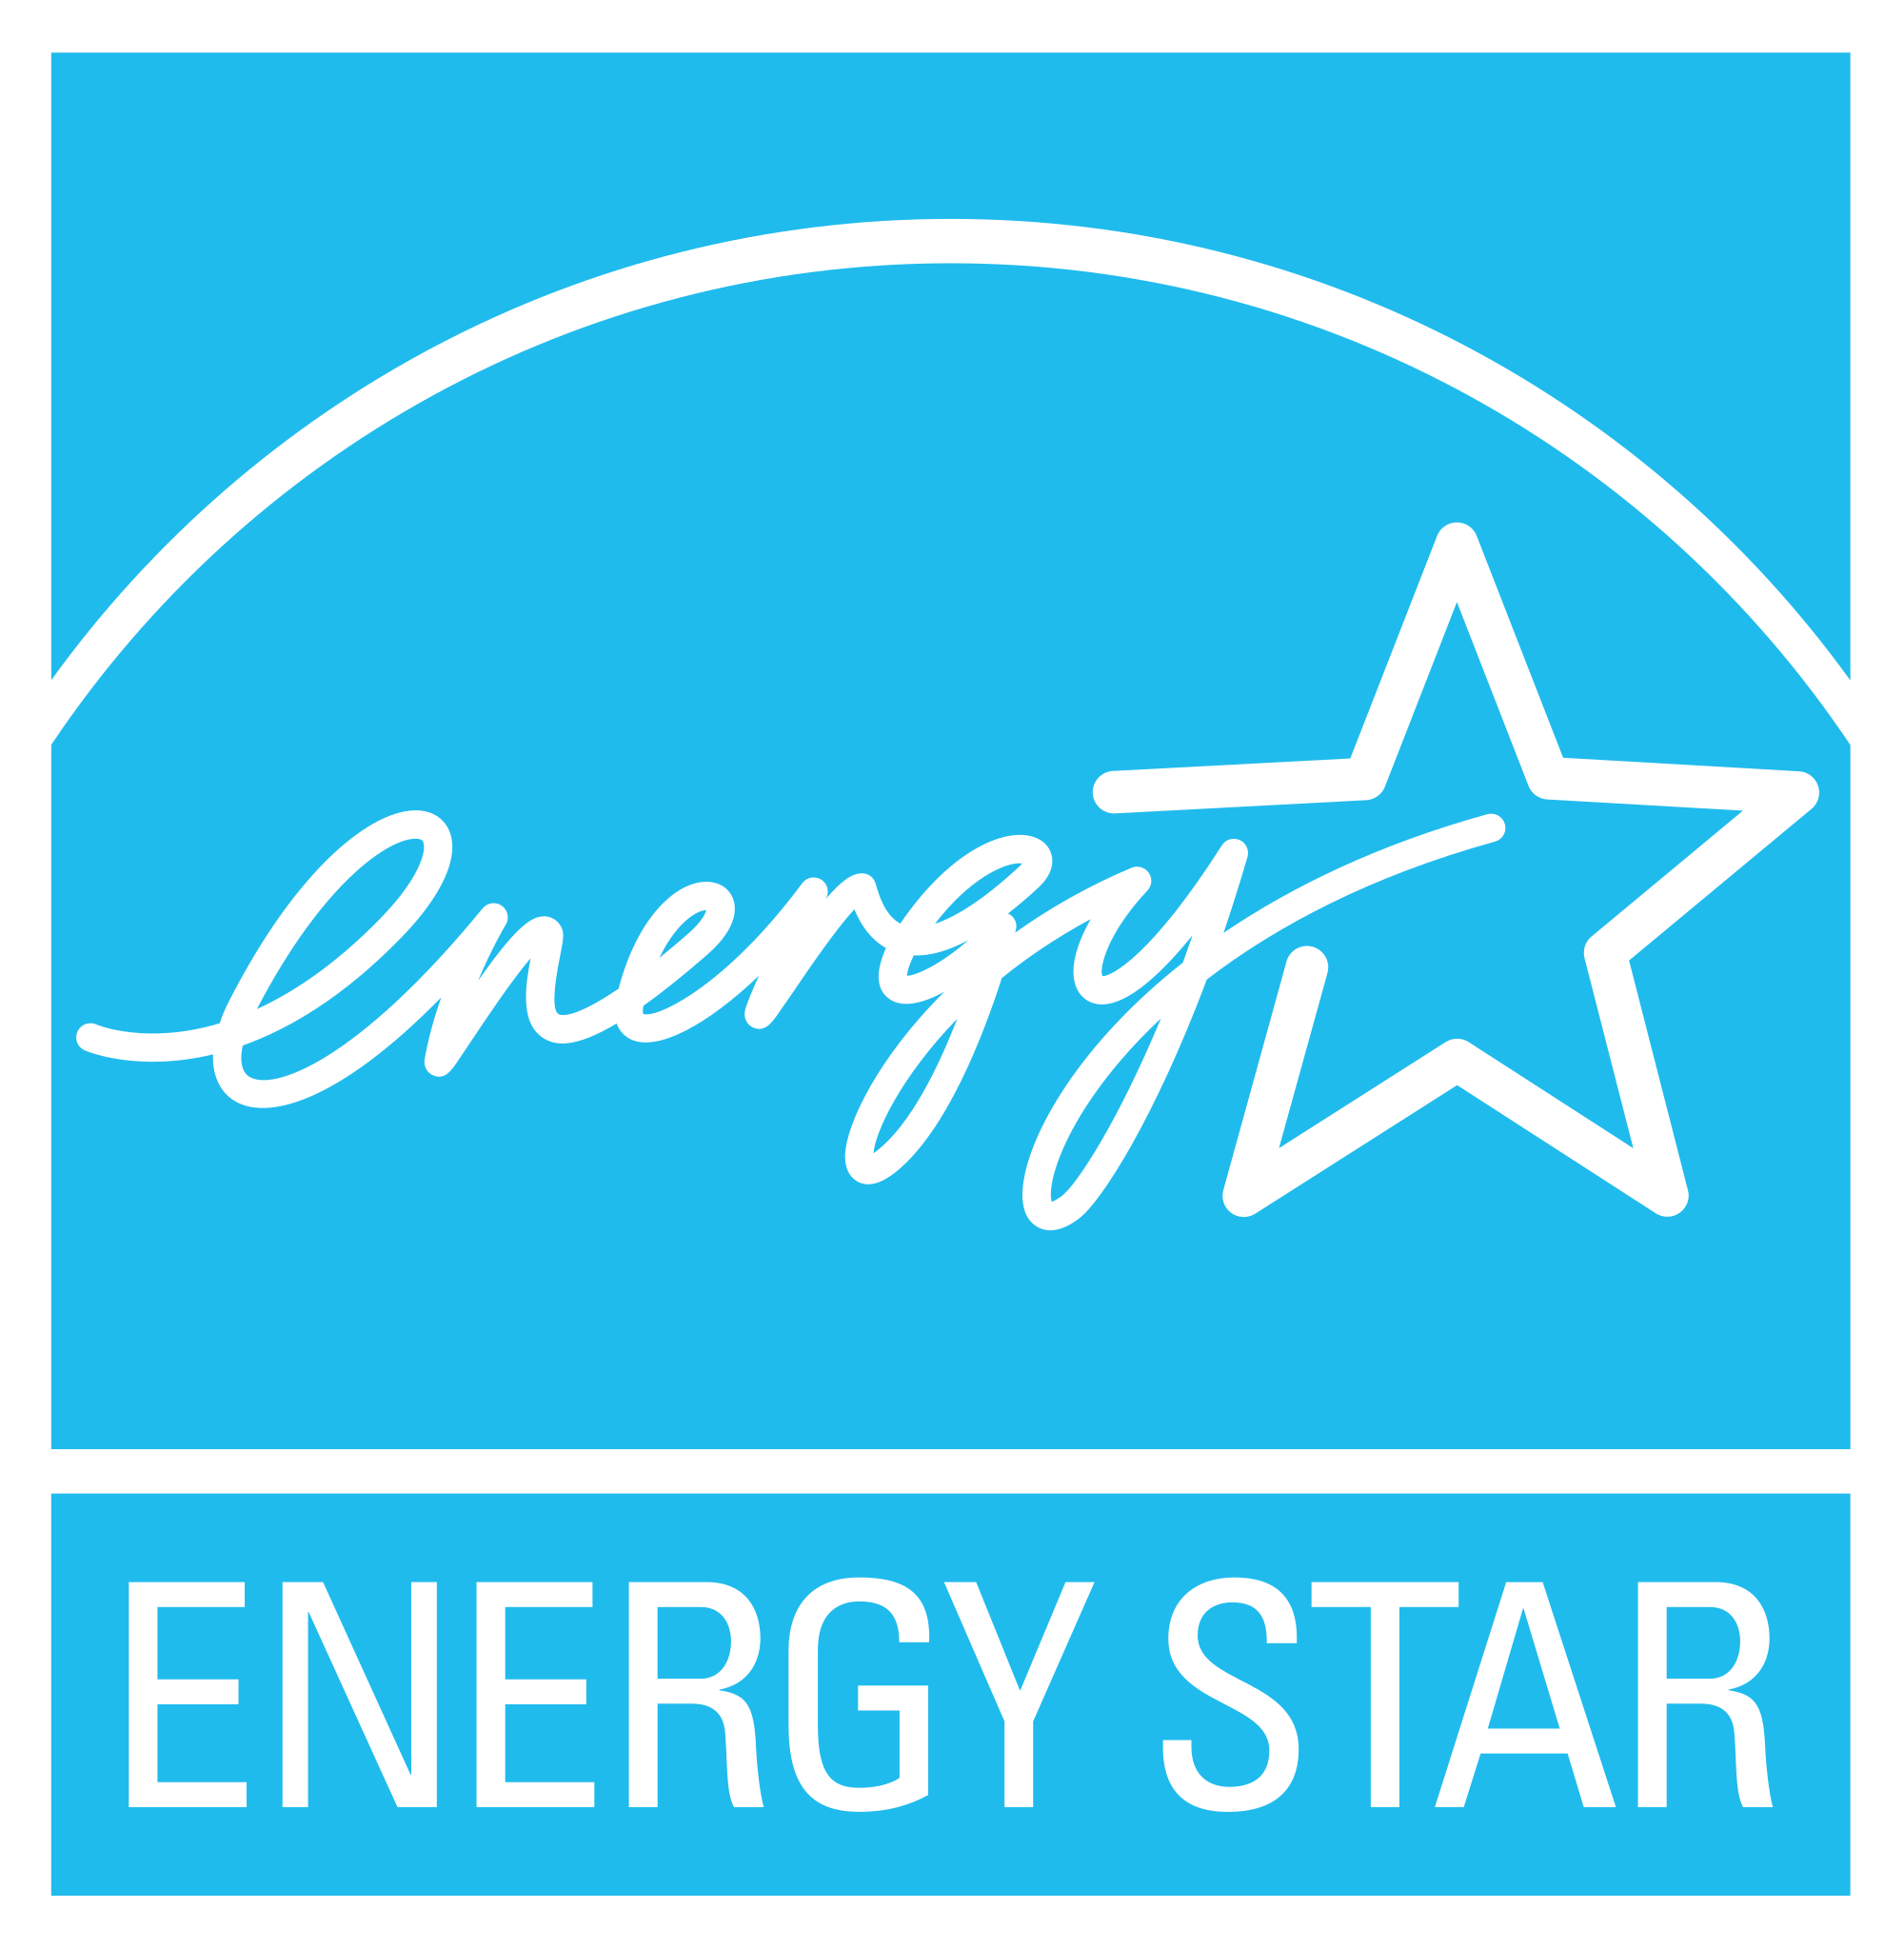 EPA Official Logo - File:Energy Star logo.svg - Wikimedia Commons